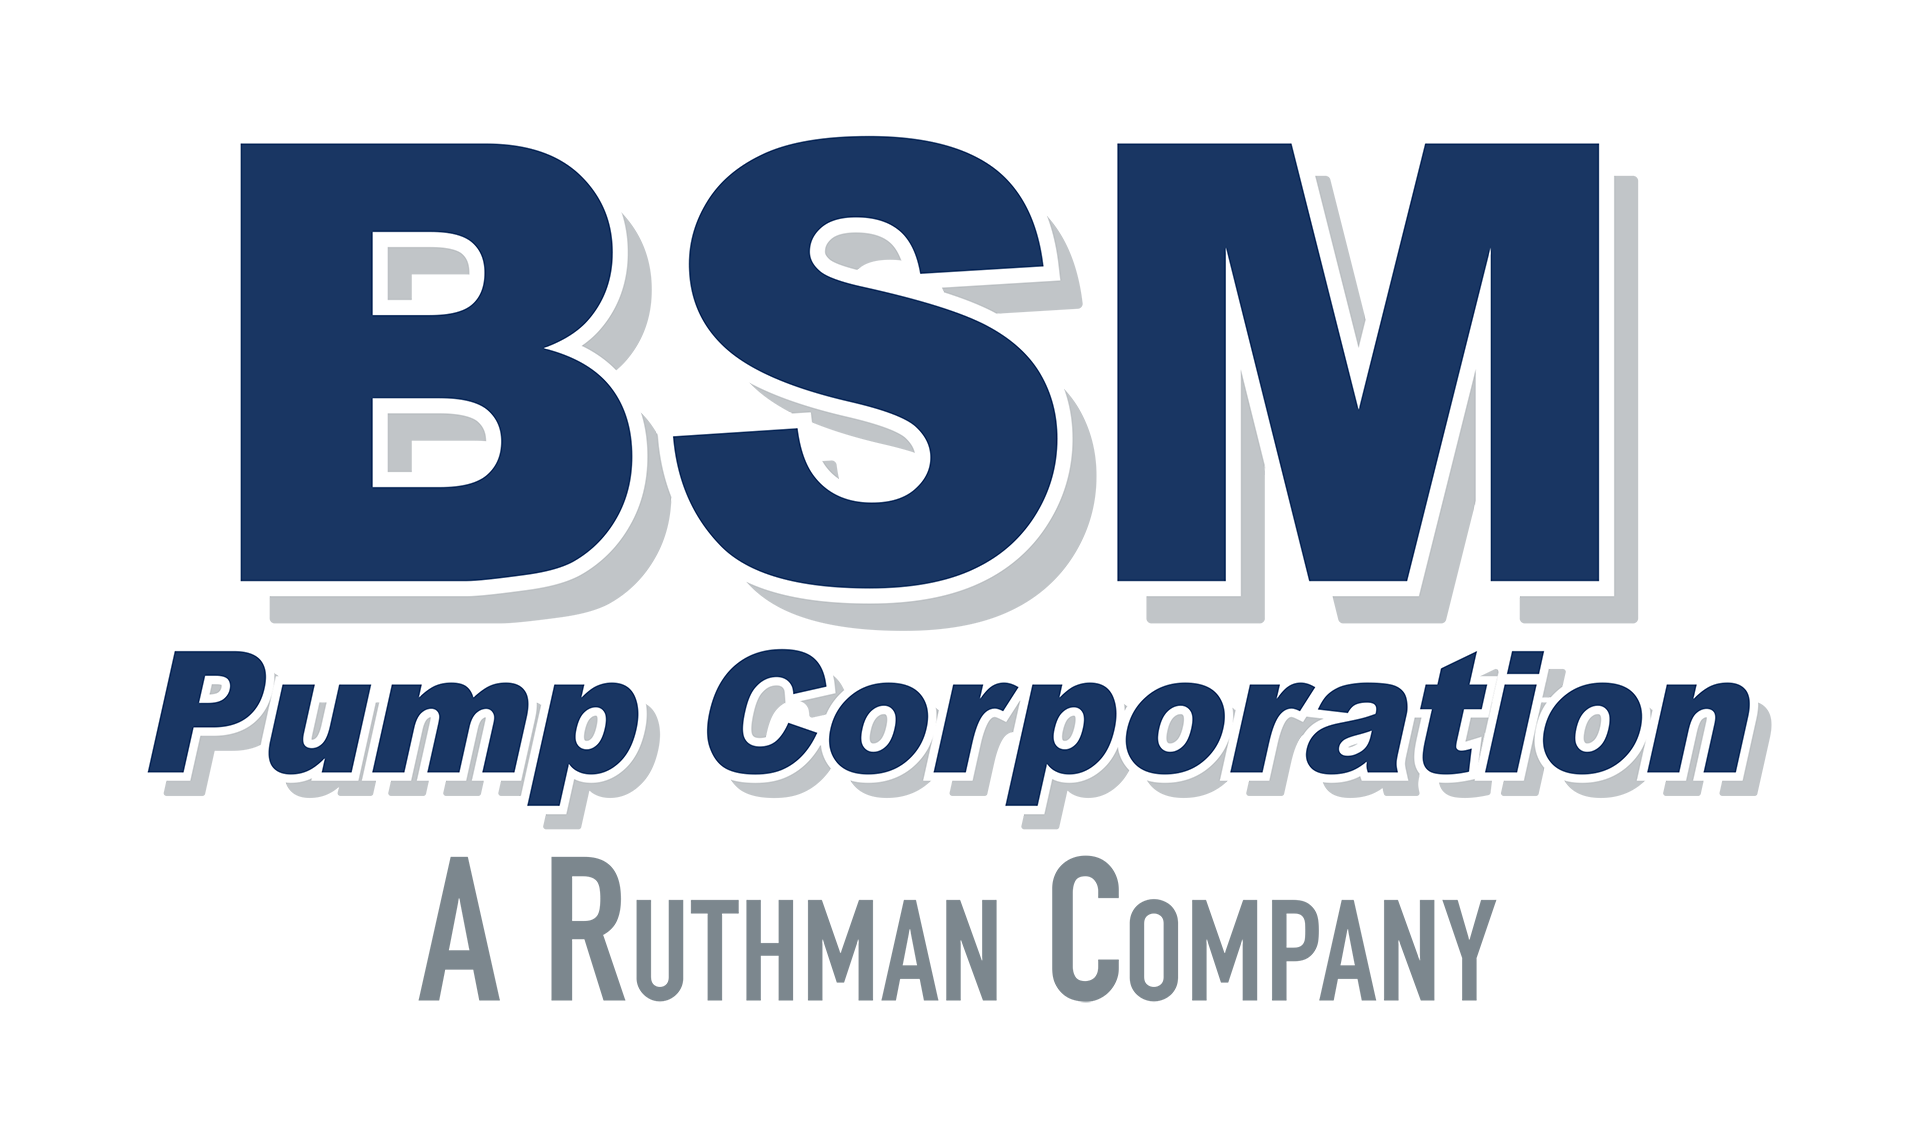 BSM Pump Logo